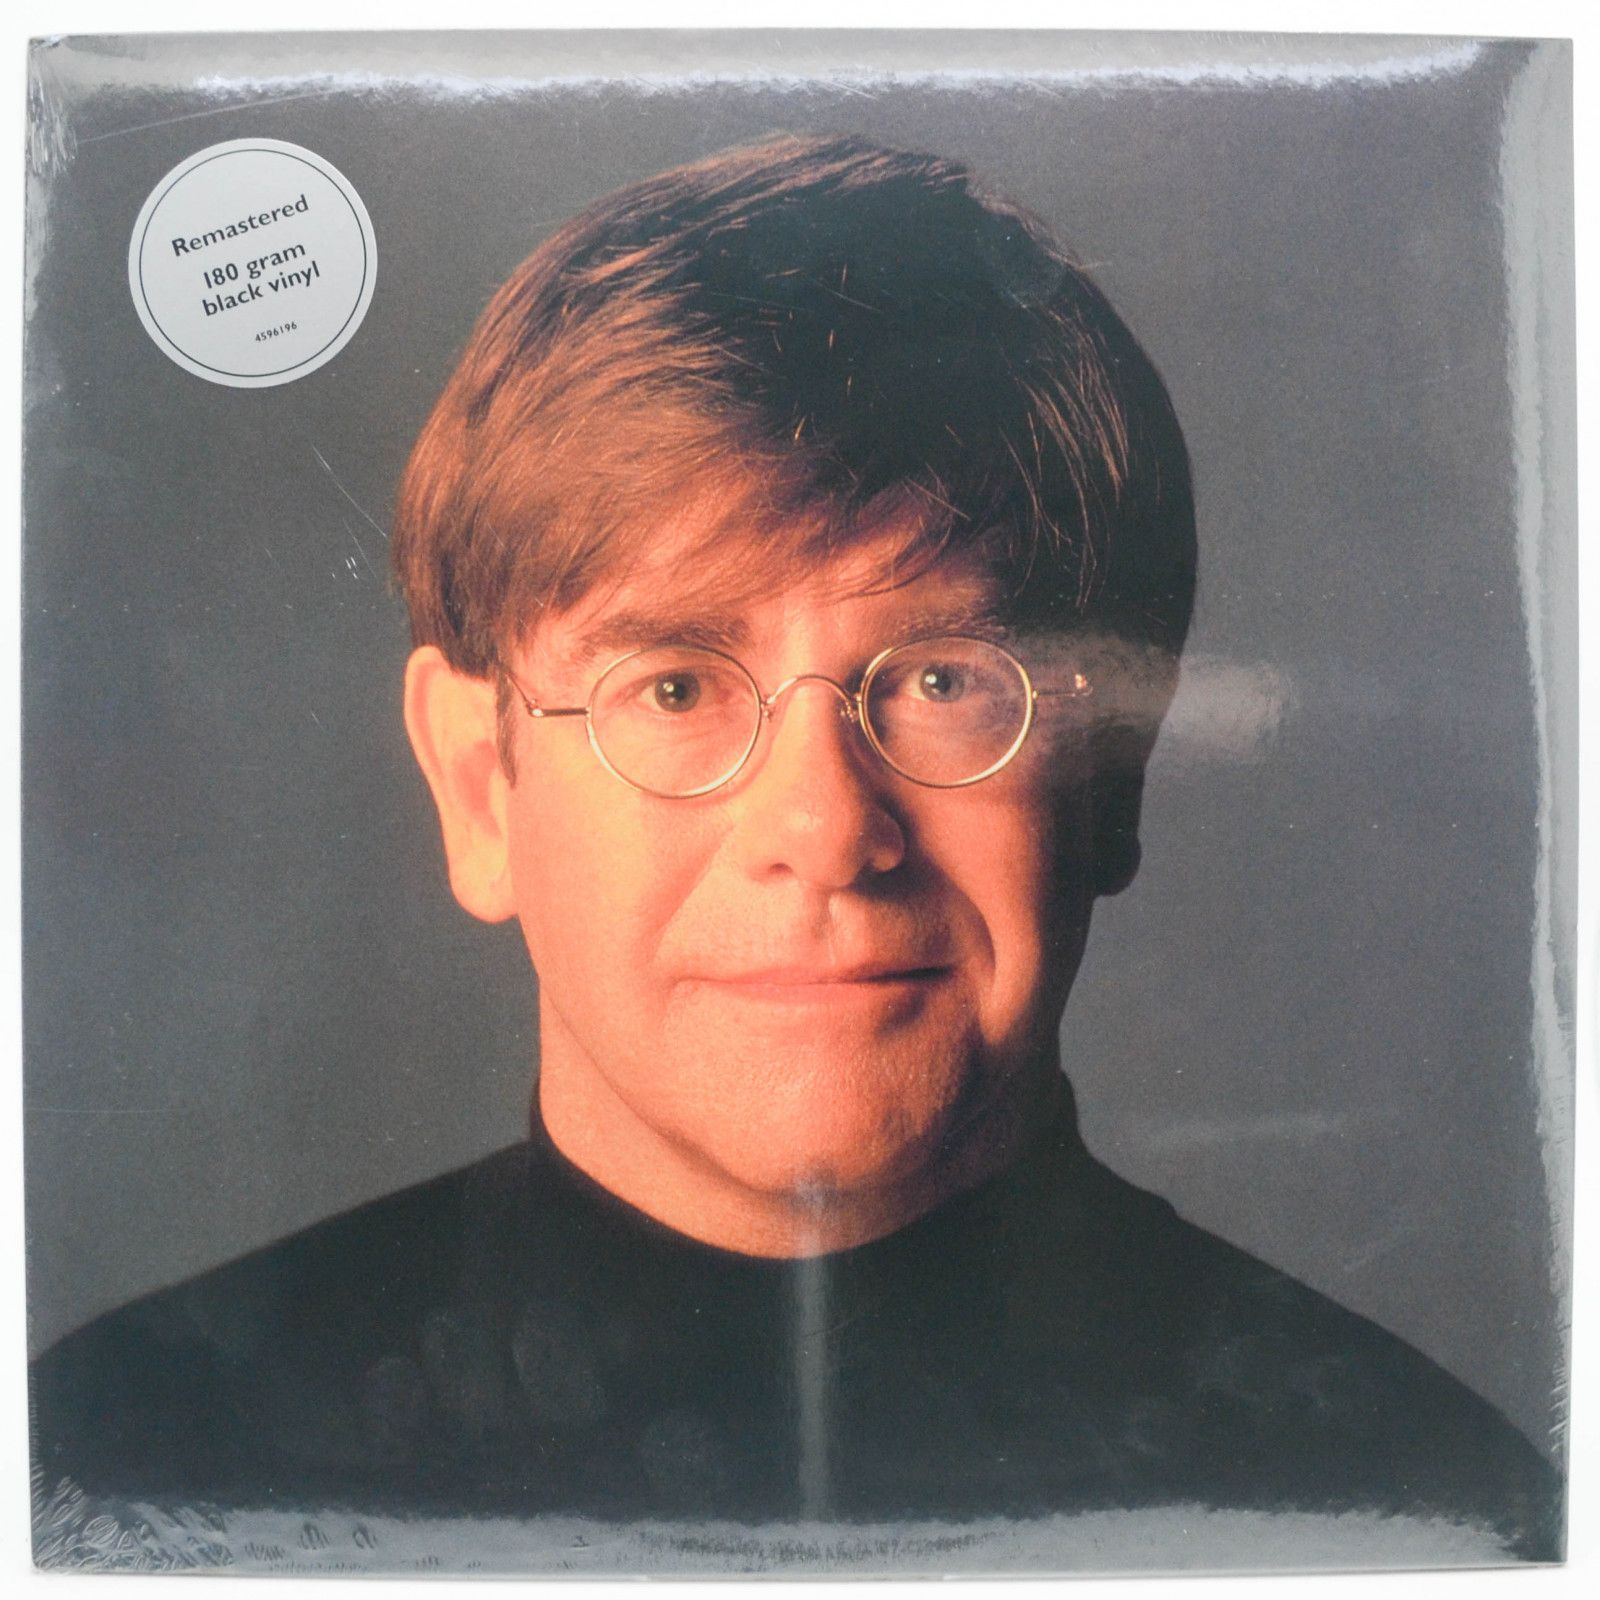 Elton John — Made In England, 1995